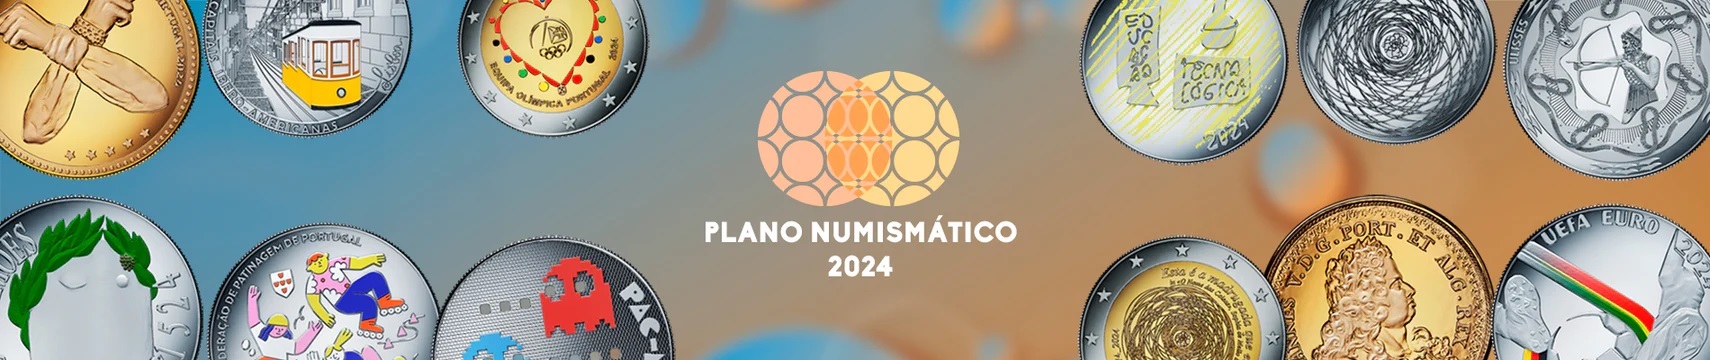 Portugal numismatic program 2024 (blog illustration) (zoom)